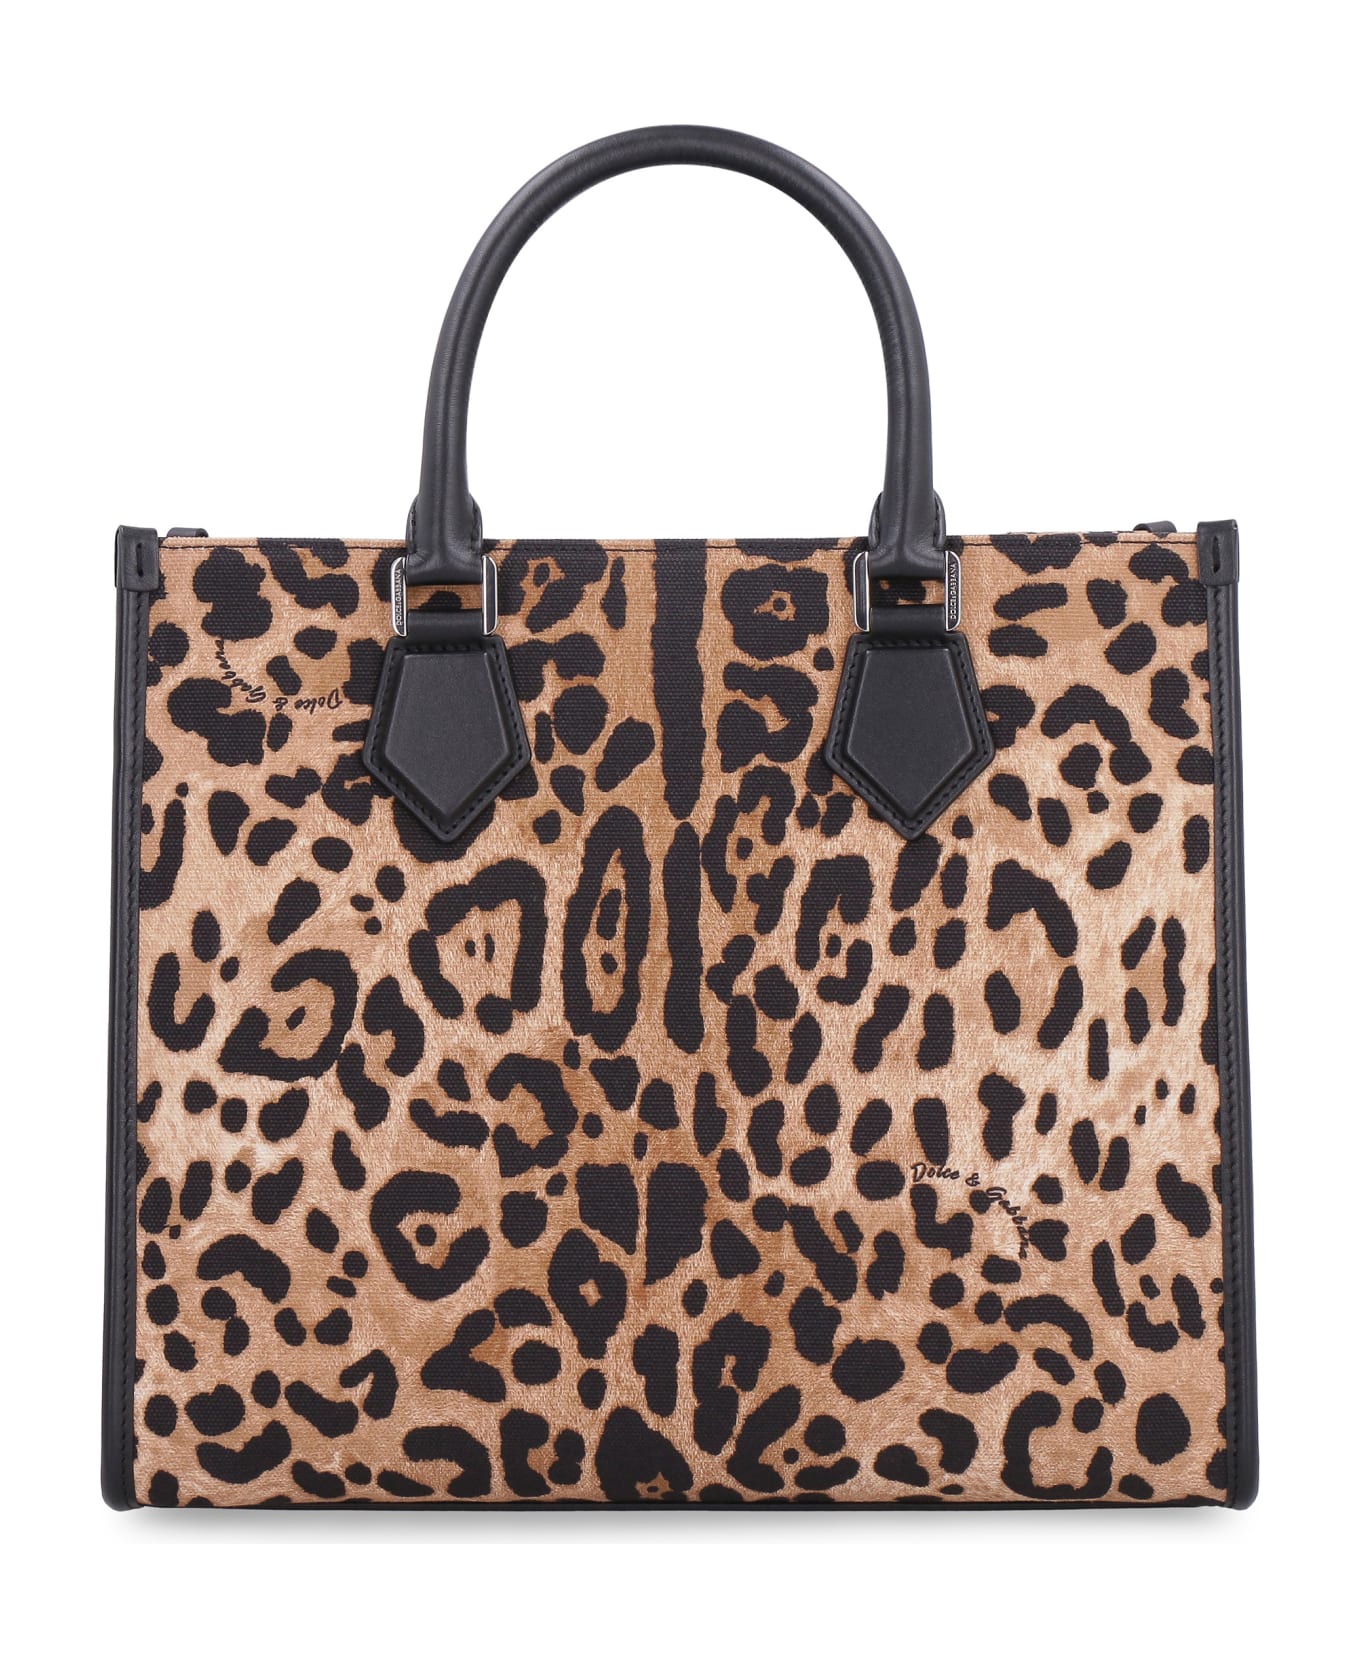 Dolce & Gabbana Canvas Tote Bag - Animalier